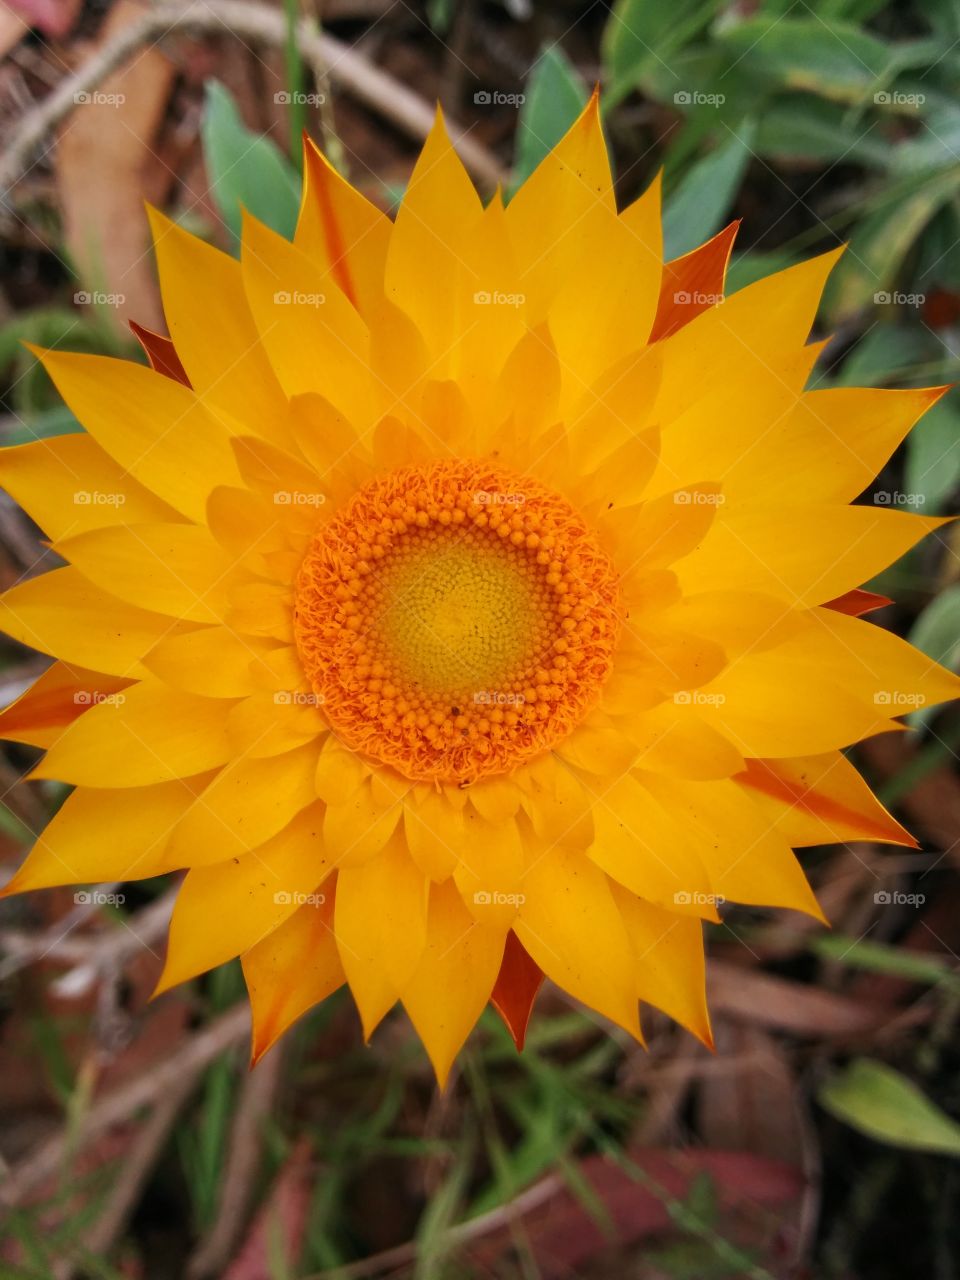 Petals of Sunshine. Beautiful flower found while walking through Golden Gate Park in San Francisco.